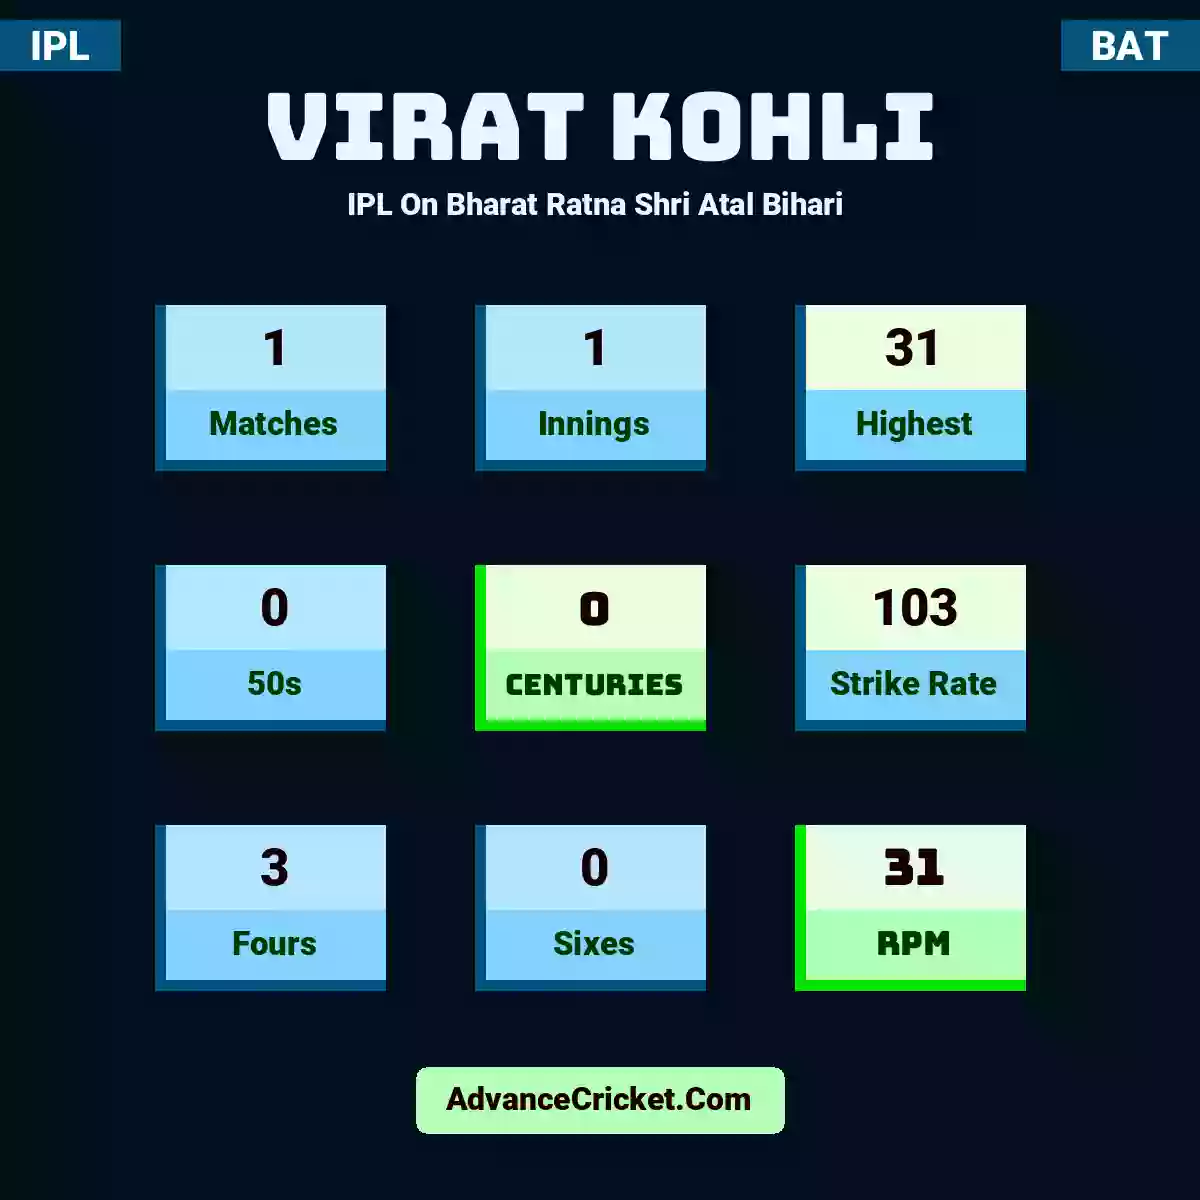 Virat Kohli IPL  On Bharat Ratna Shri Atal Bihari , Virat Kohli played 1 matches, scored 31 runs as highest, 0 half-centuries, and 0 centuries, with a strike rate of 103. V.Kohli hit 3 fours and 0 sixes, with an RPM of 31.